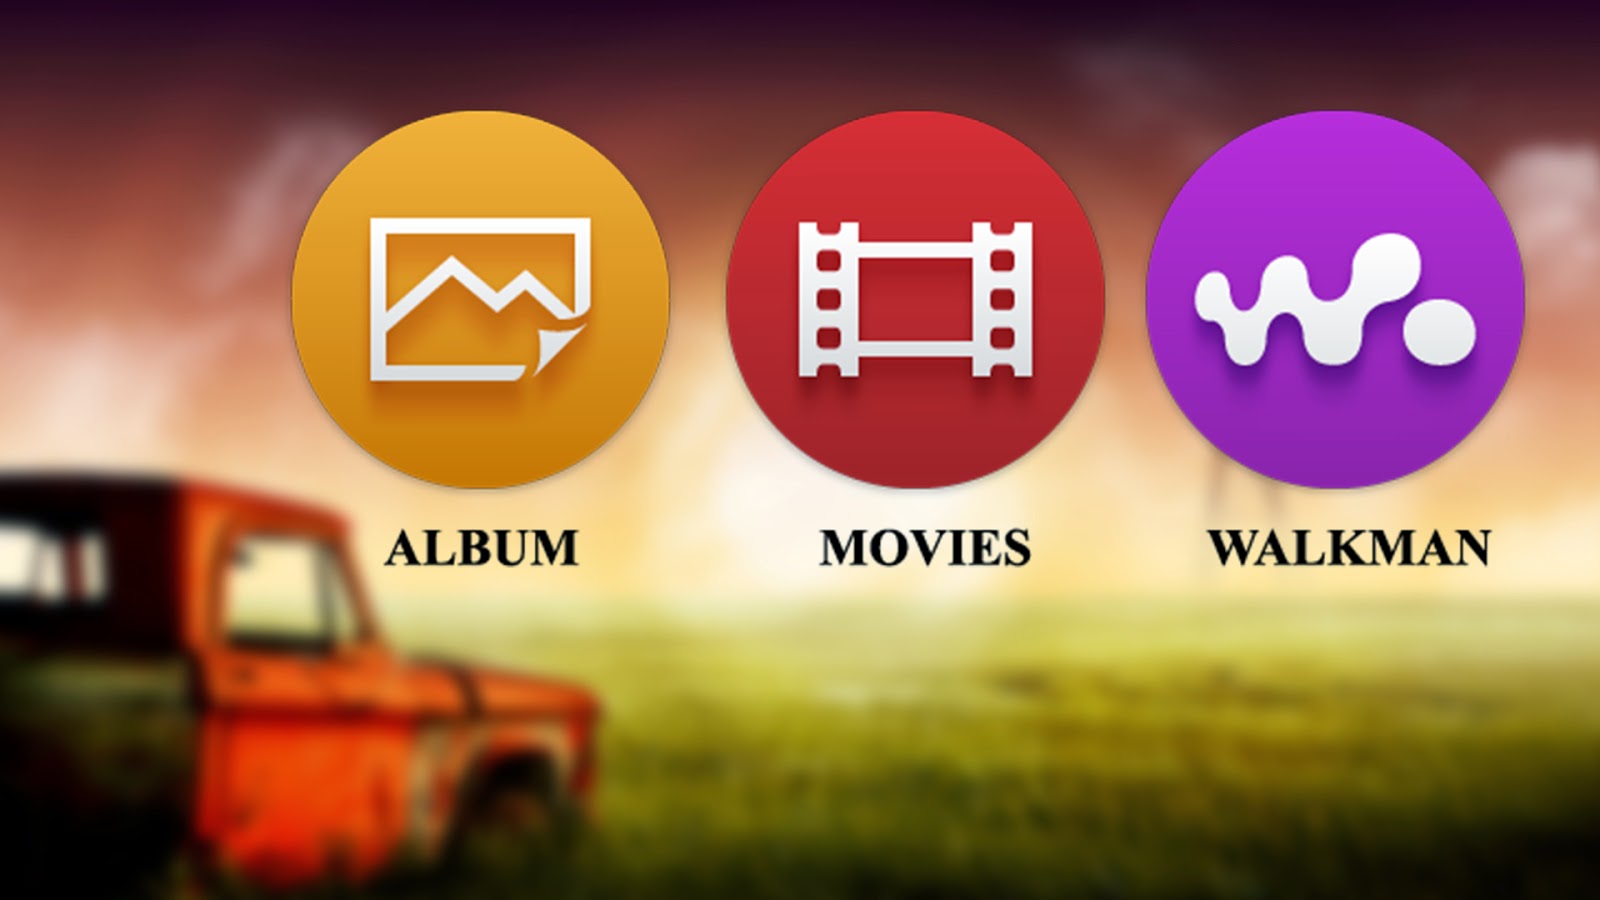 Sony Material Design Apps Album - Walkman - Movies ...